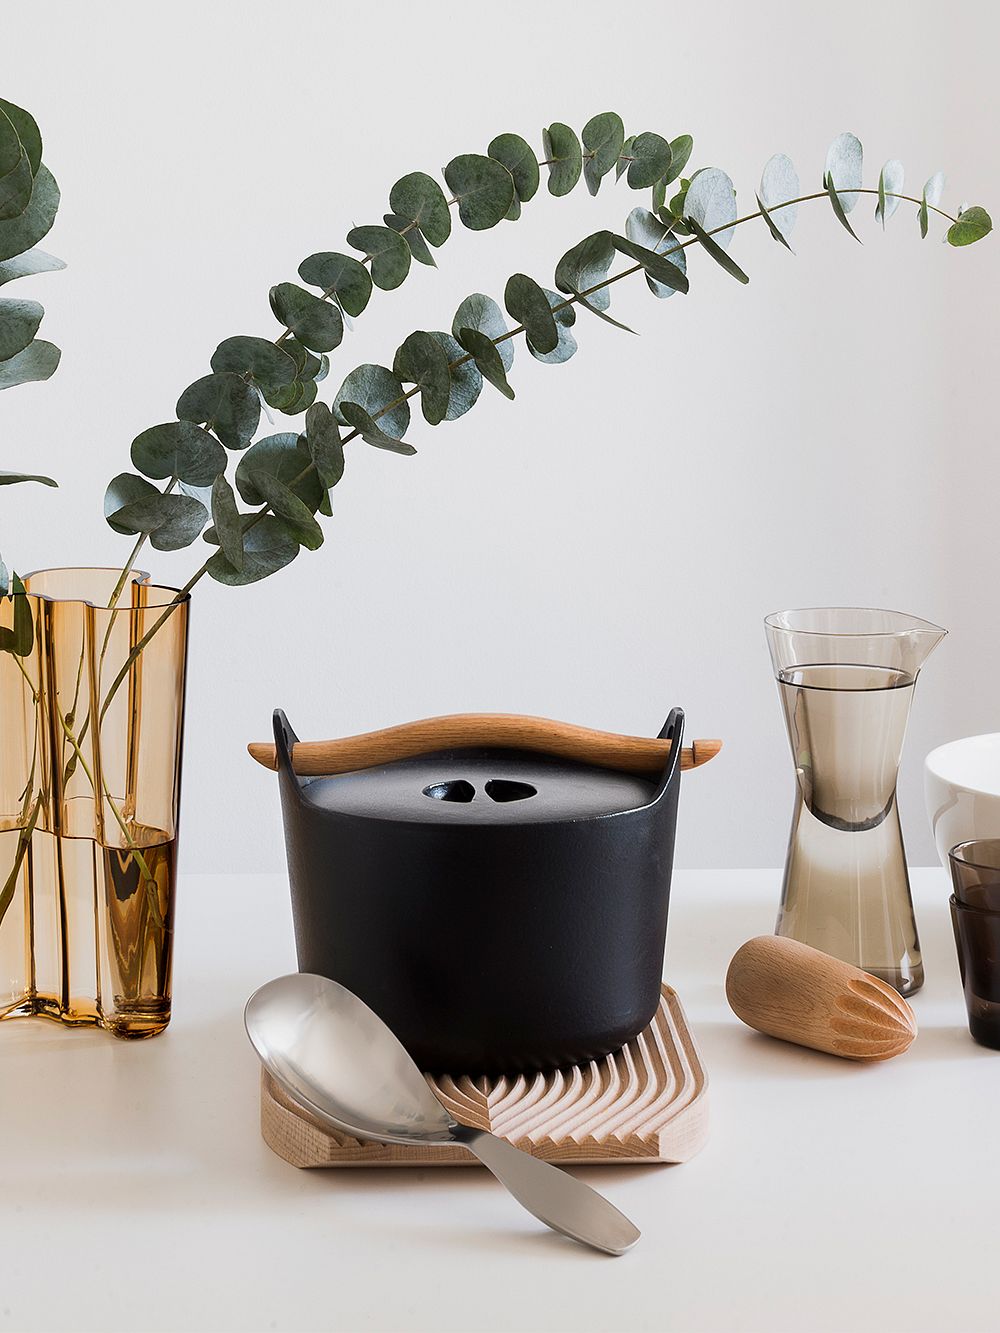 An image of Iittala's Sarpaneva cast iron pot as part of the kitchen decor.